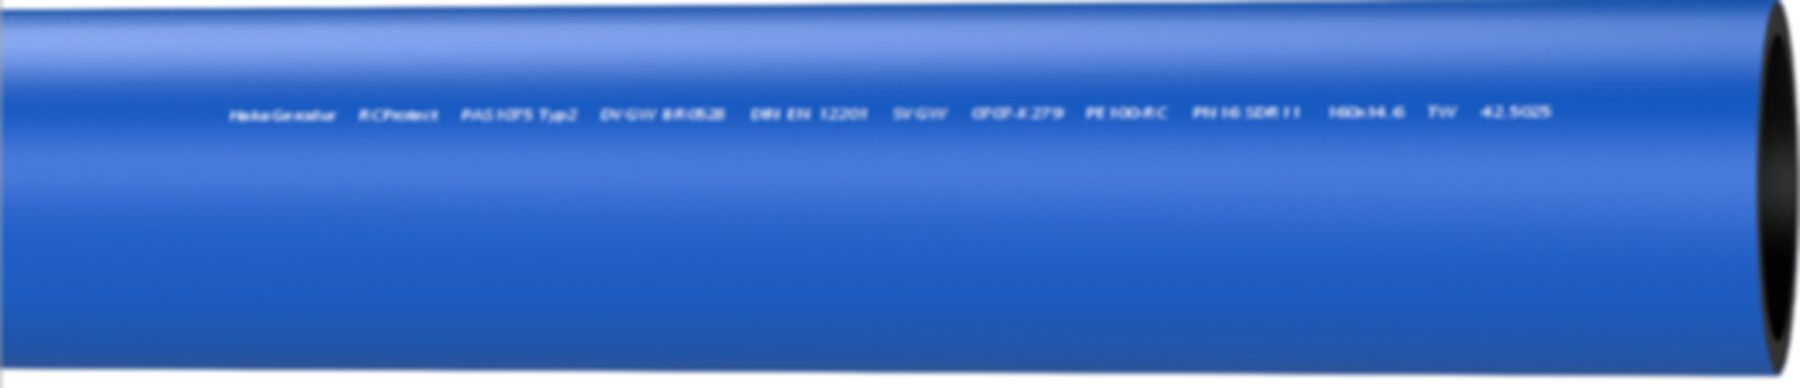 Druckrohr Wasser PE 100RC, SDR 17, PN 10 d 200 x 11.9mm - RCprotect in Stangen